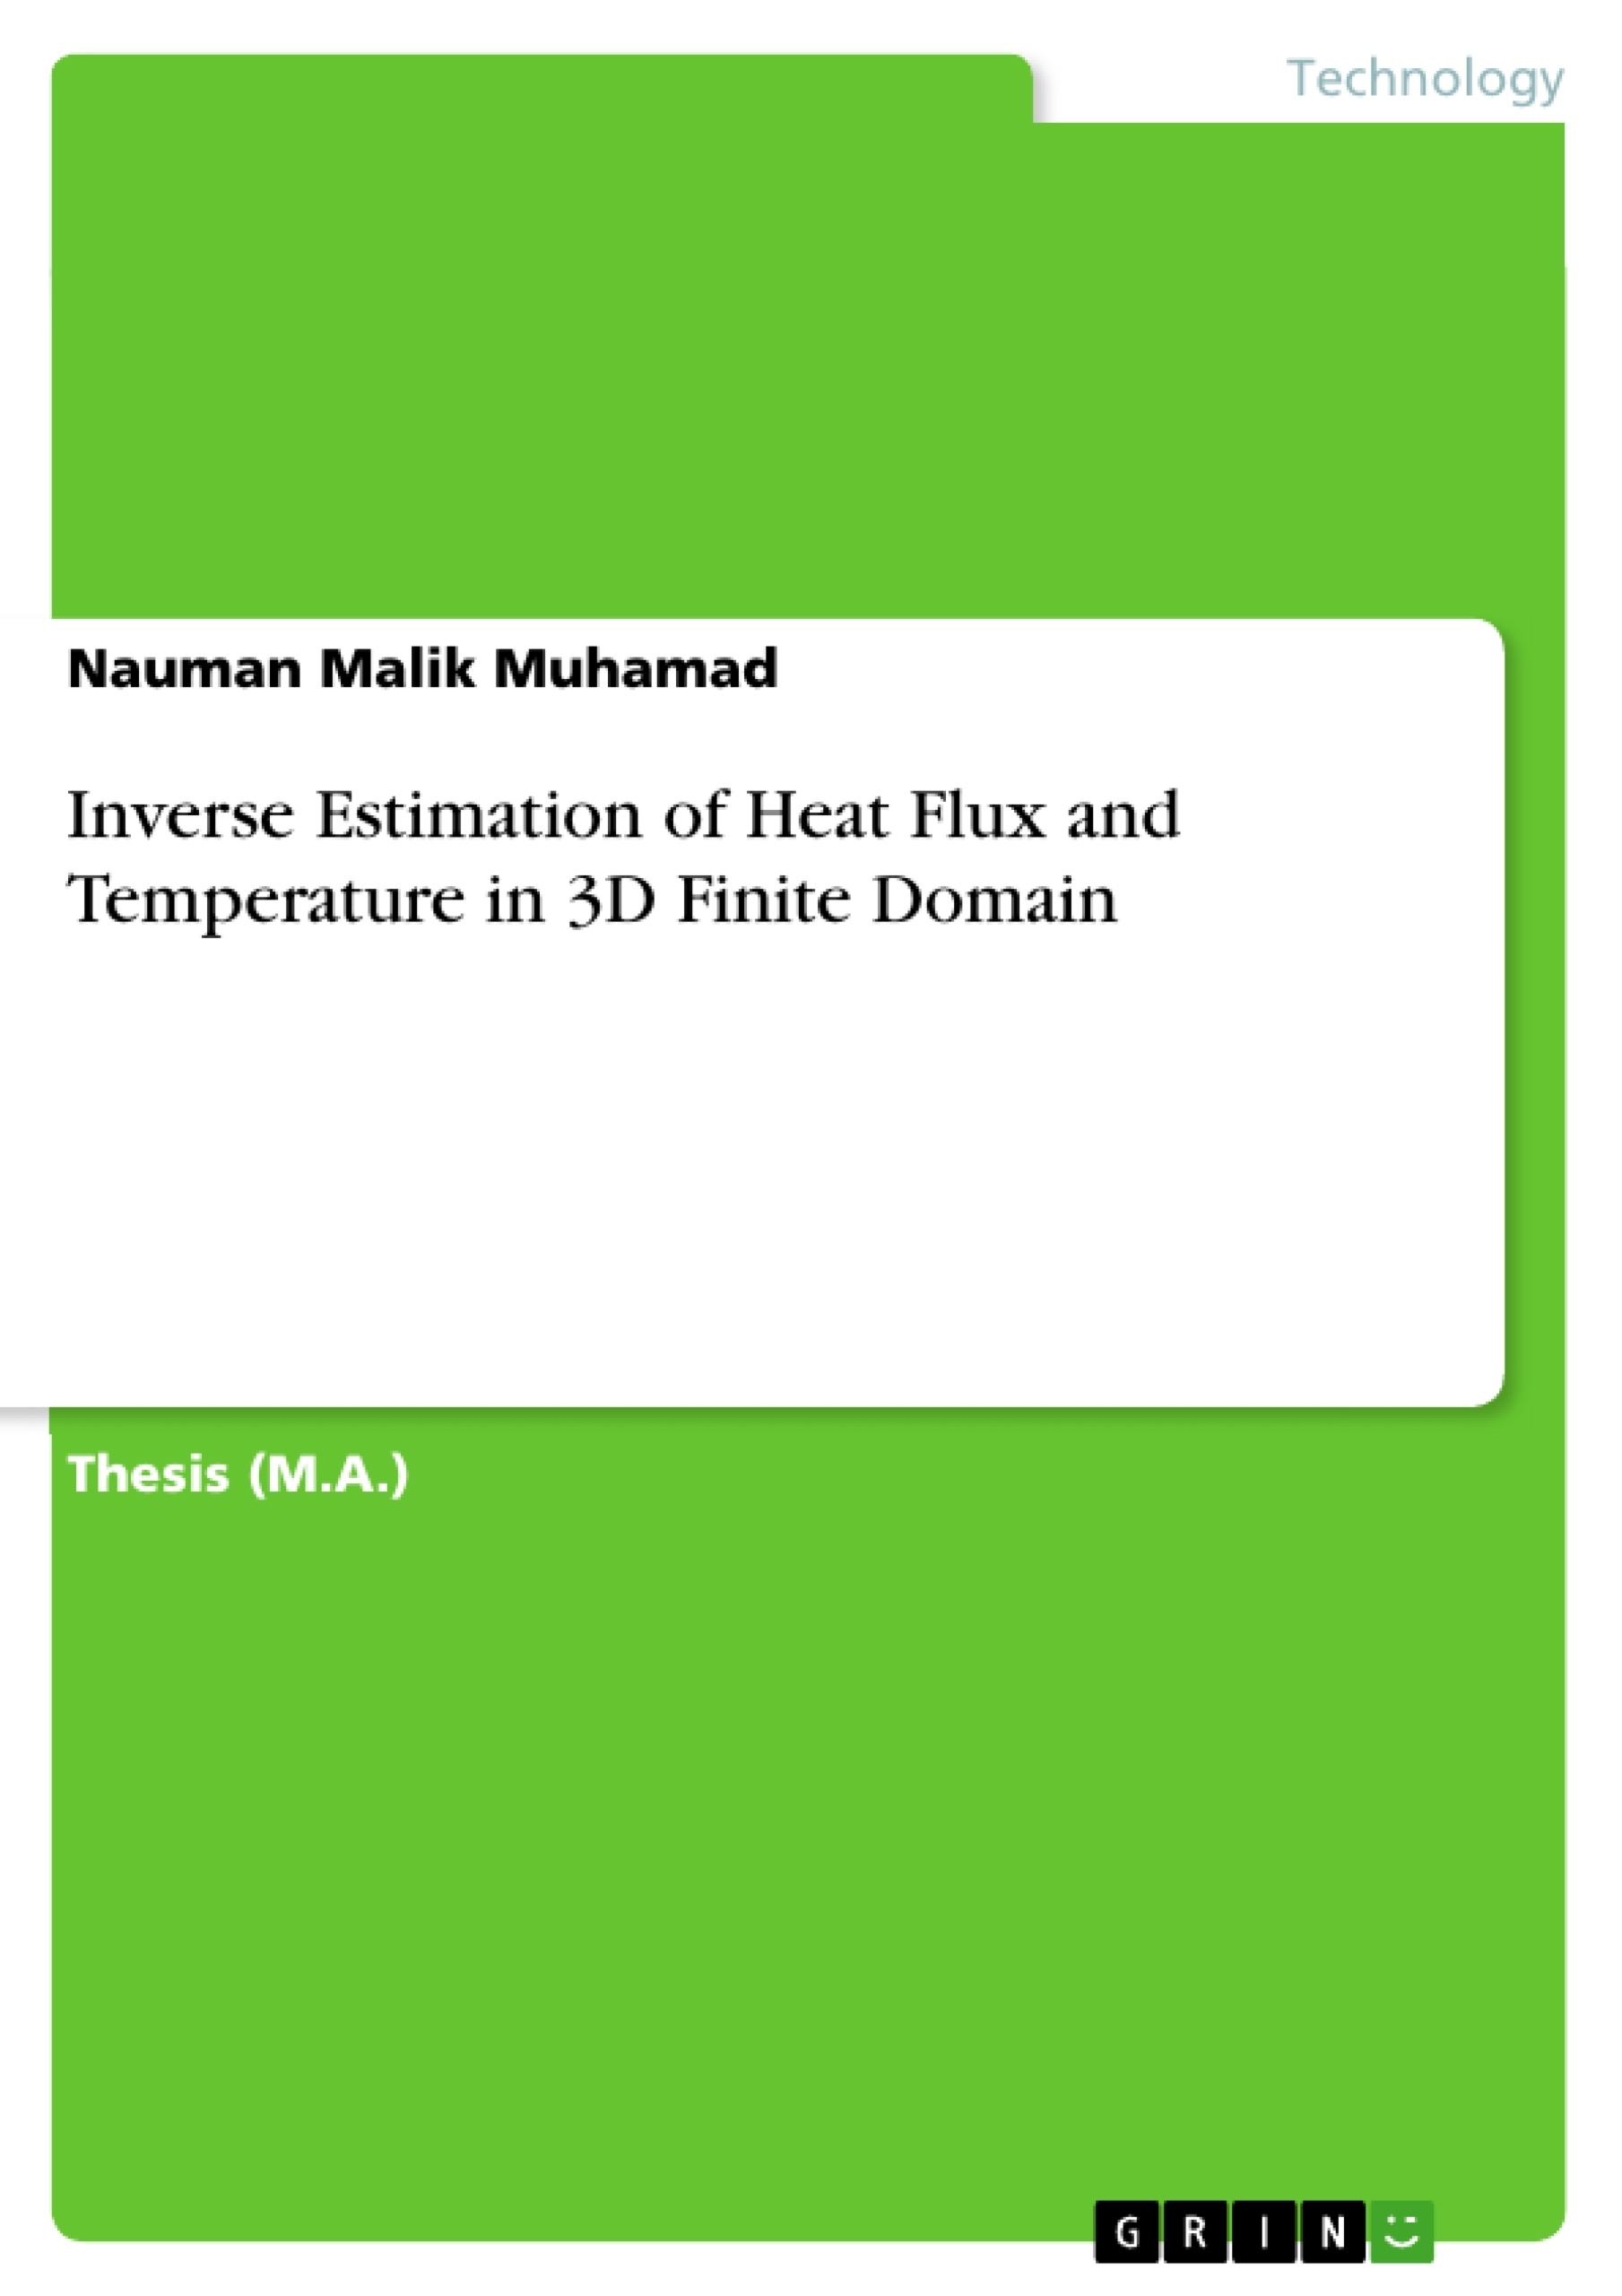 Title: Inverse Estimation of Heat Flux and Temperature in 3D Finite Domain